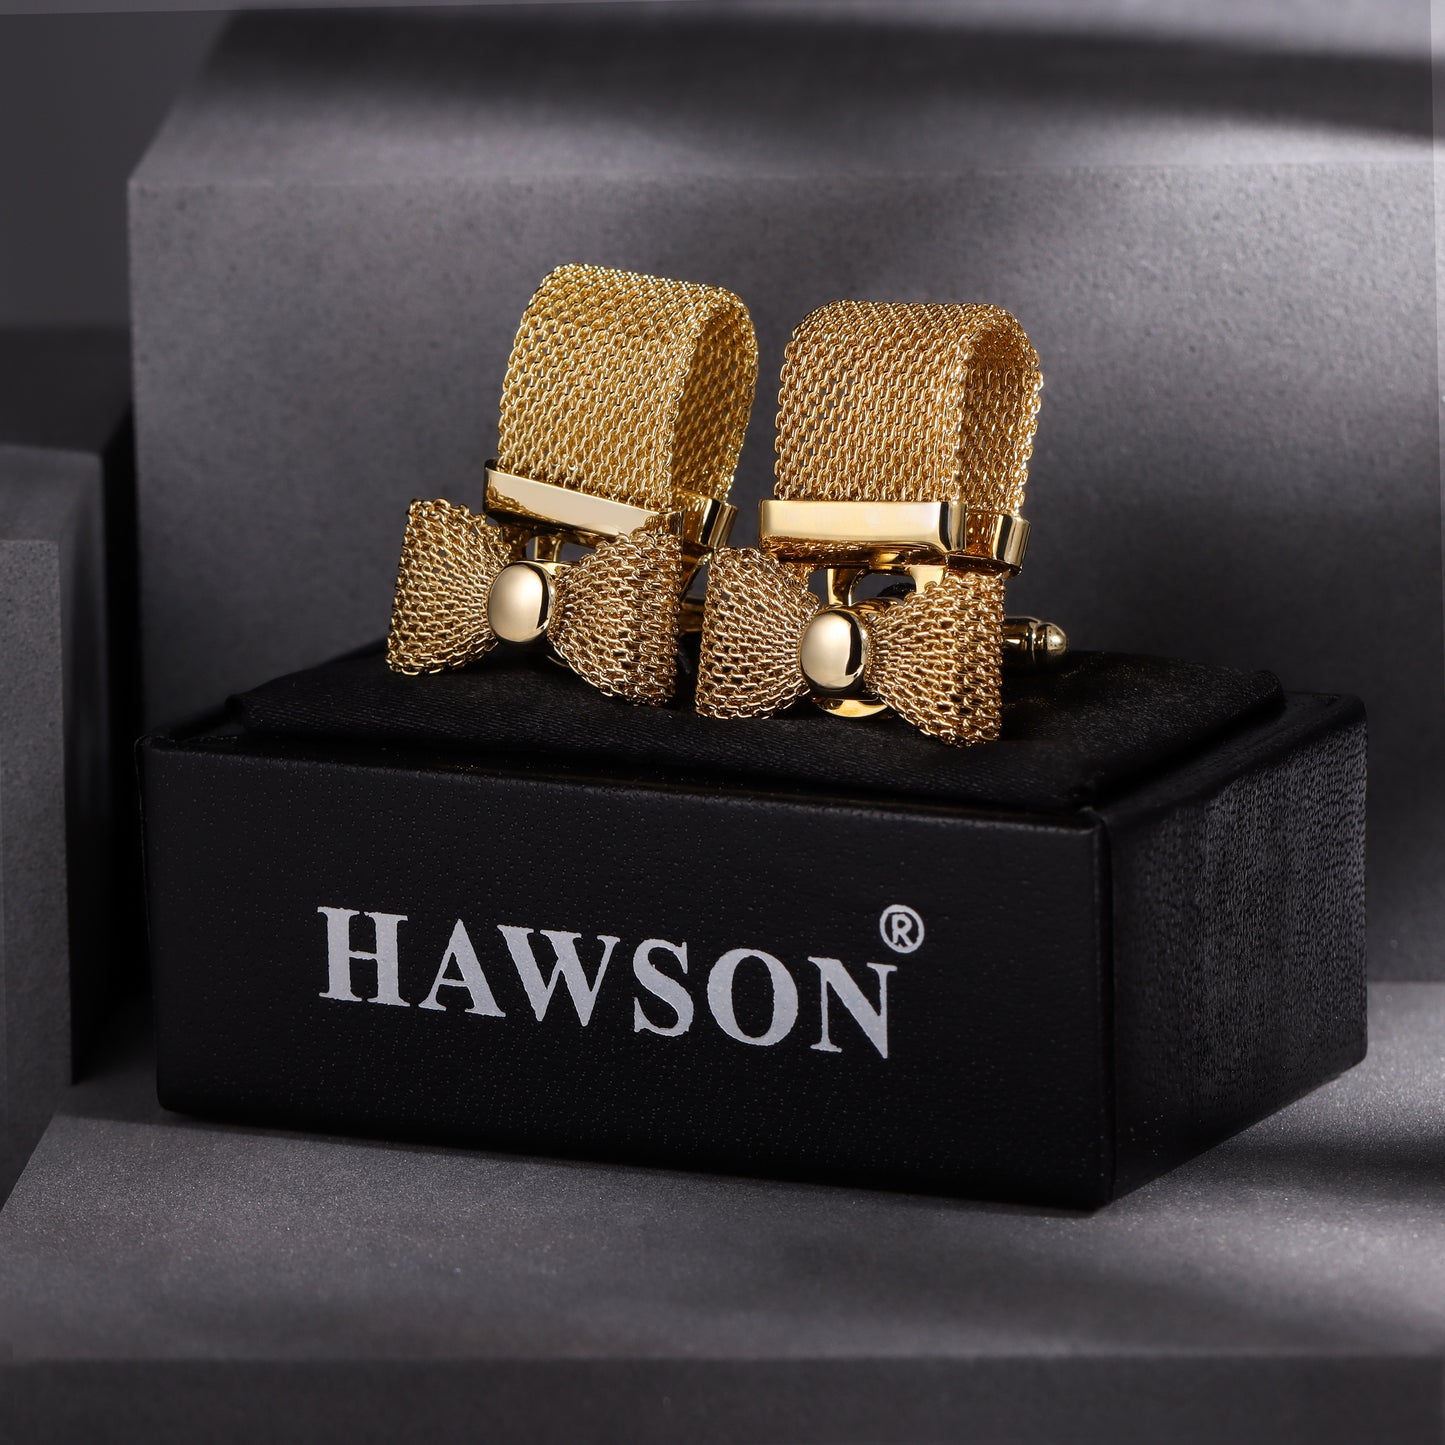 HAWSON Novelty Bow Cufflinks with Chain